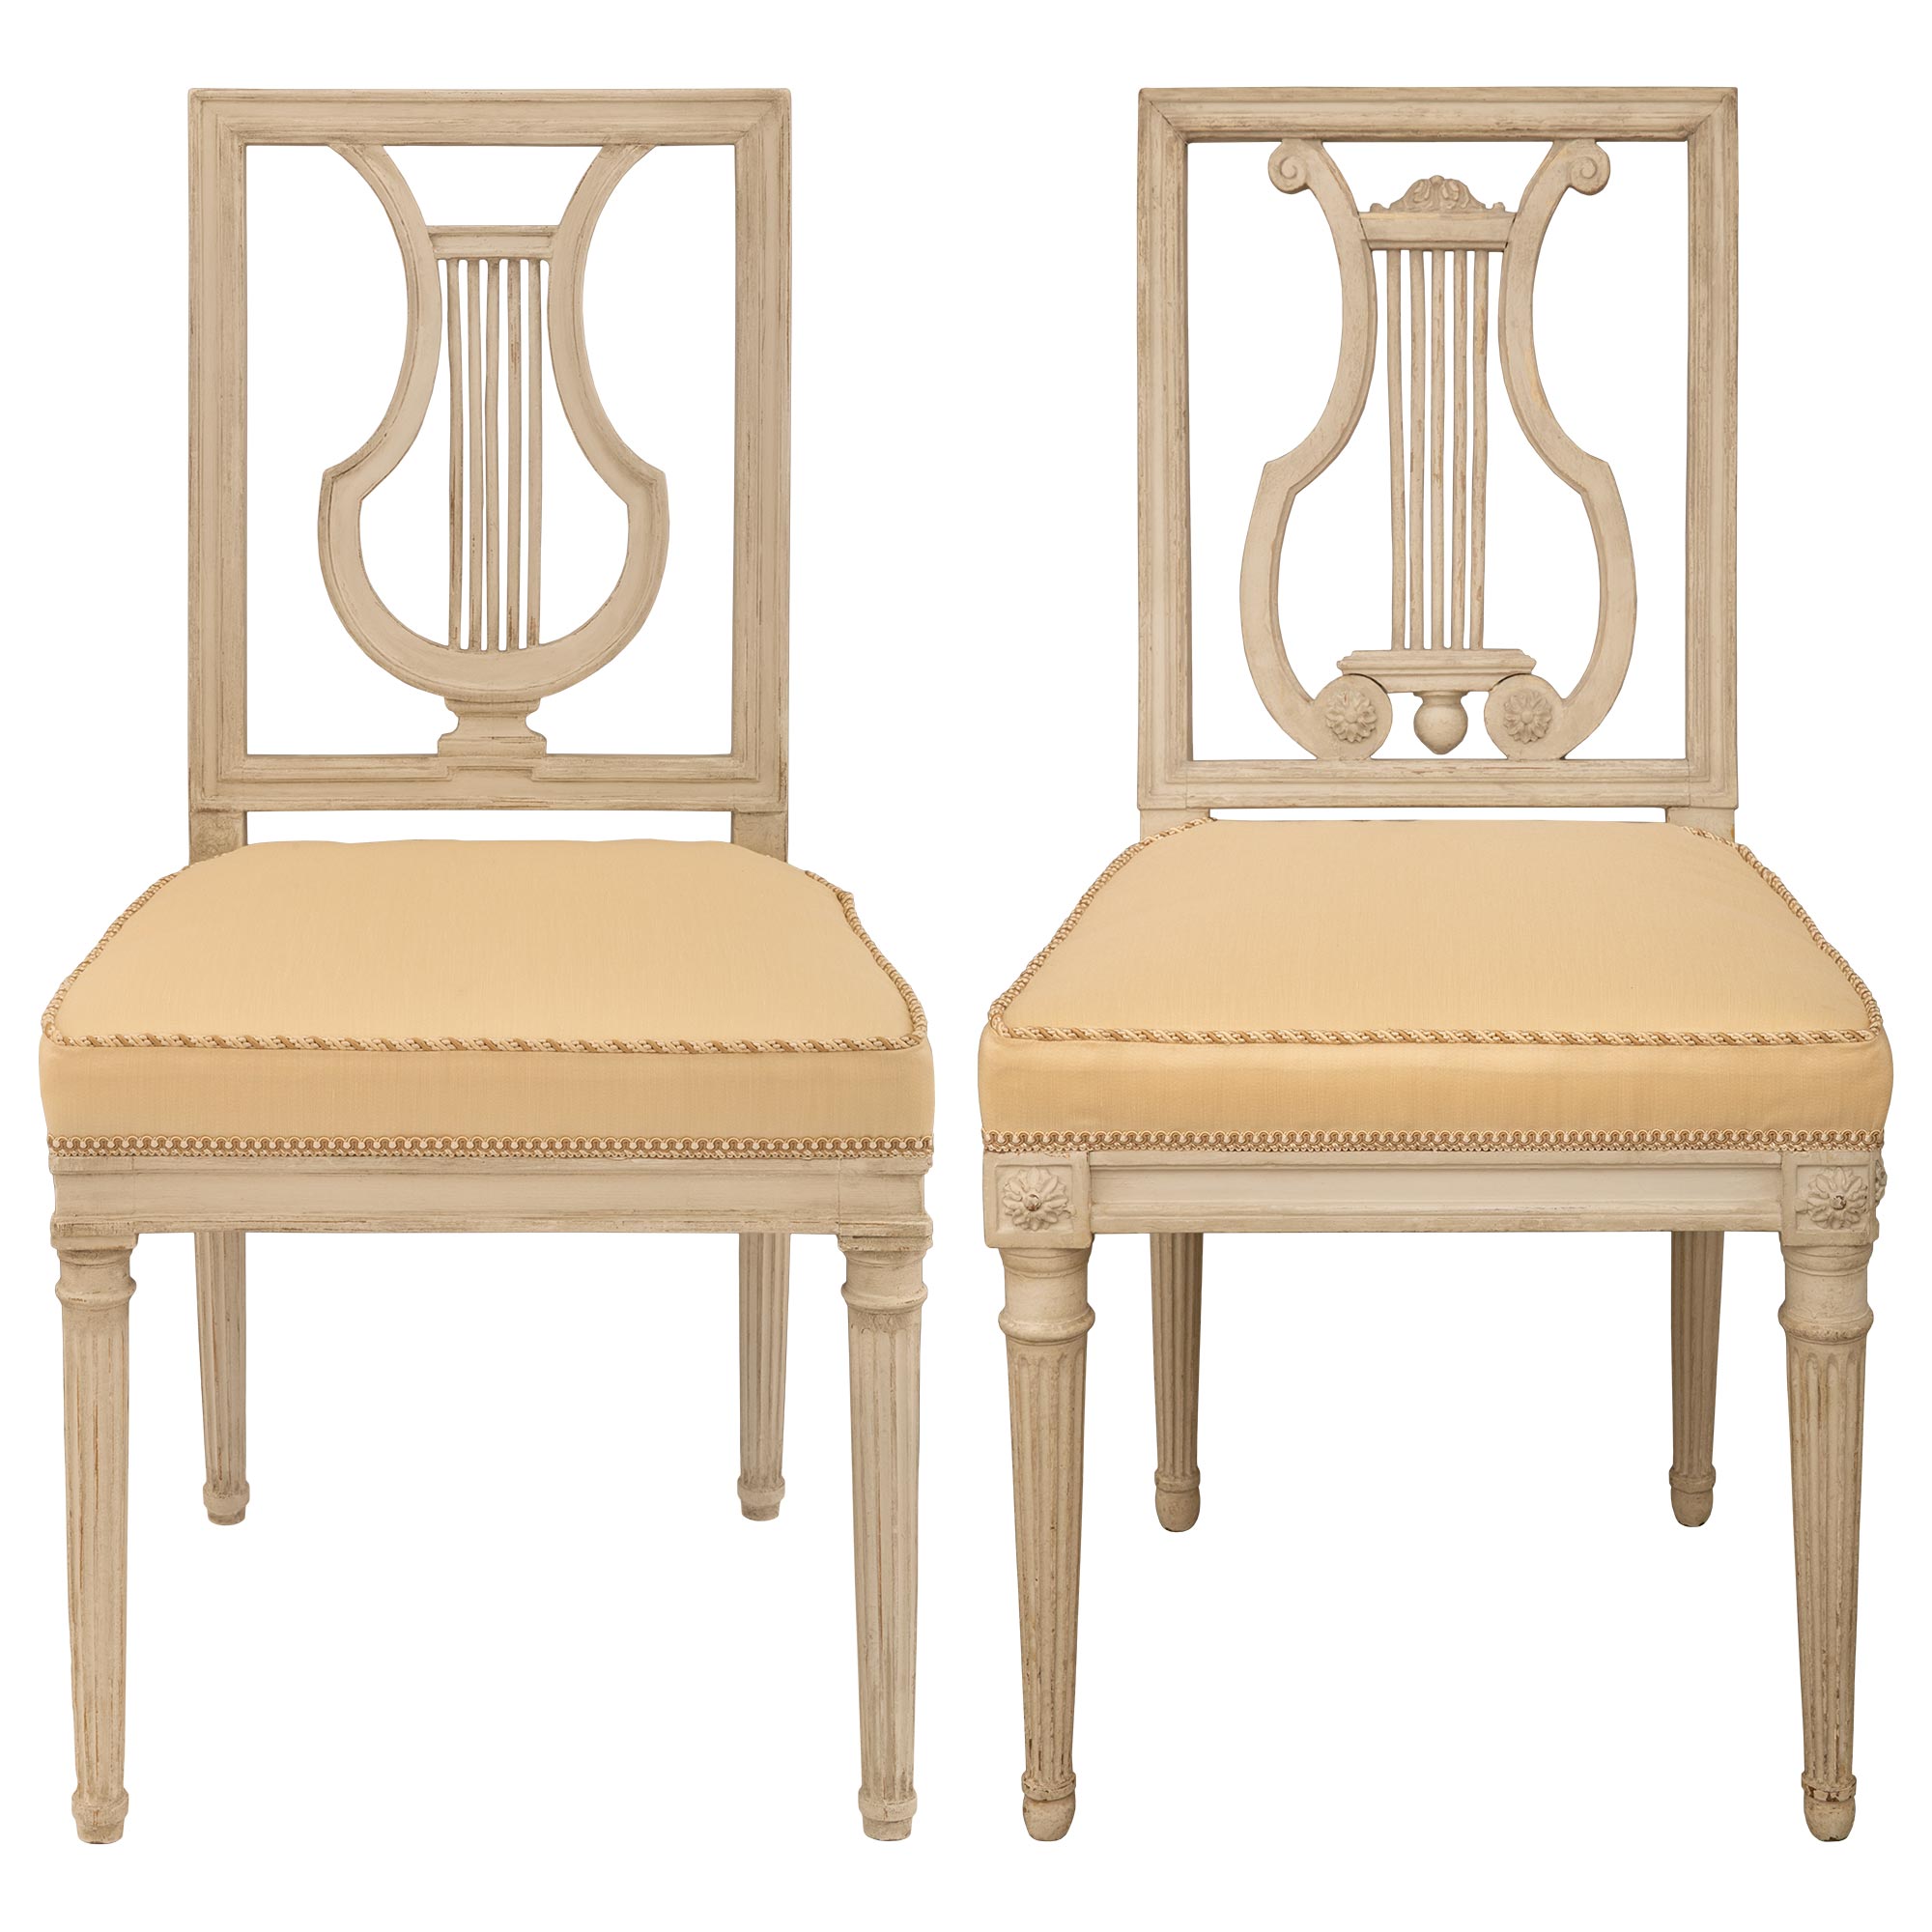 Pair of 18th Century Louis XVI Chairs  Louis xvi chair, Louis style chair,  French louis style